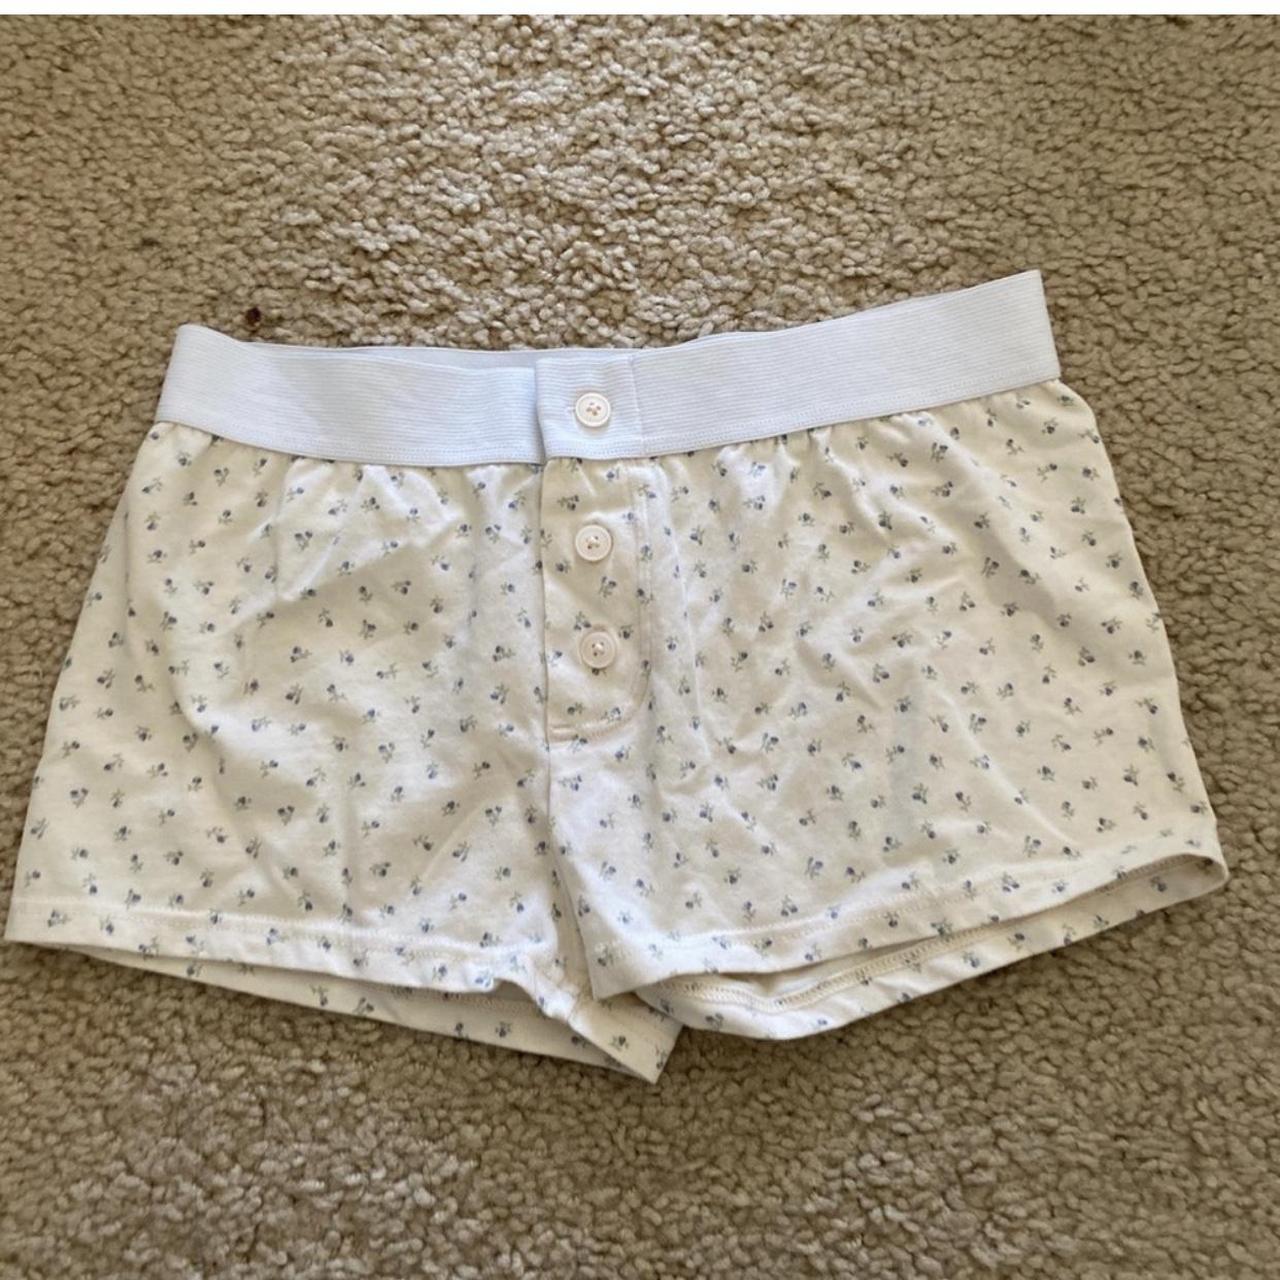 Brandy Melville Heart Boy Shorts! White shorts with - Depop